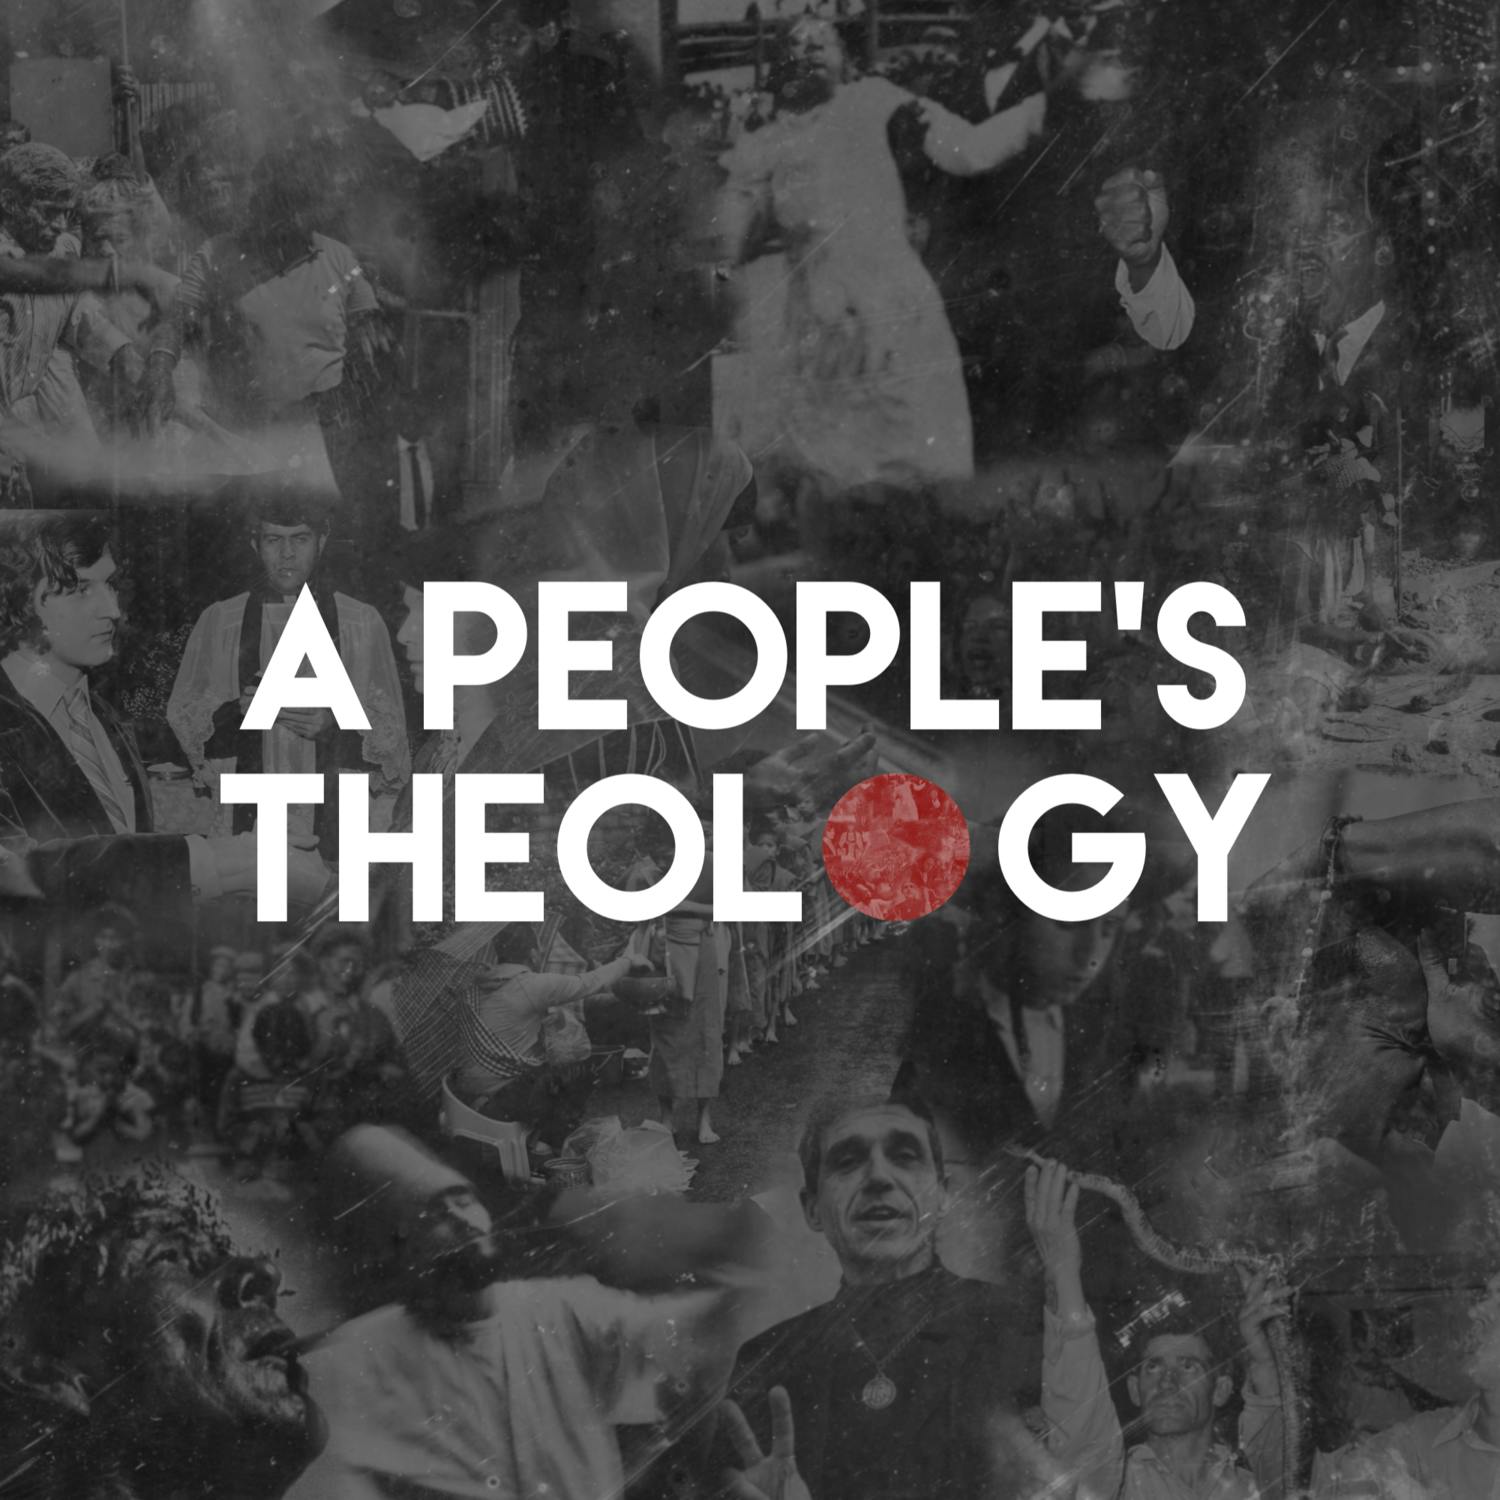 Kevin Garcia: How Does Bad Theology Kill?